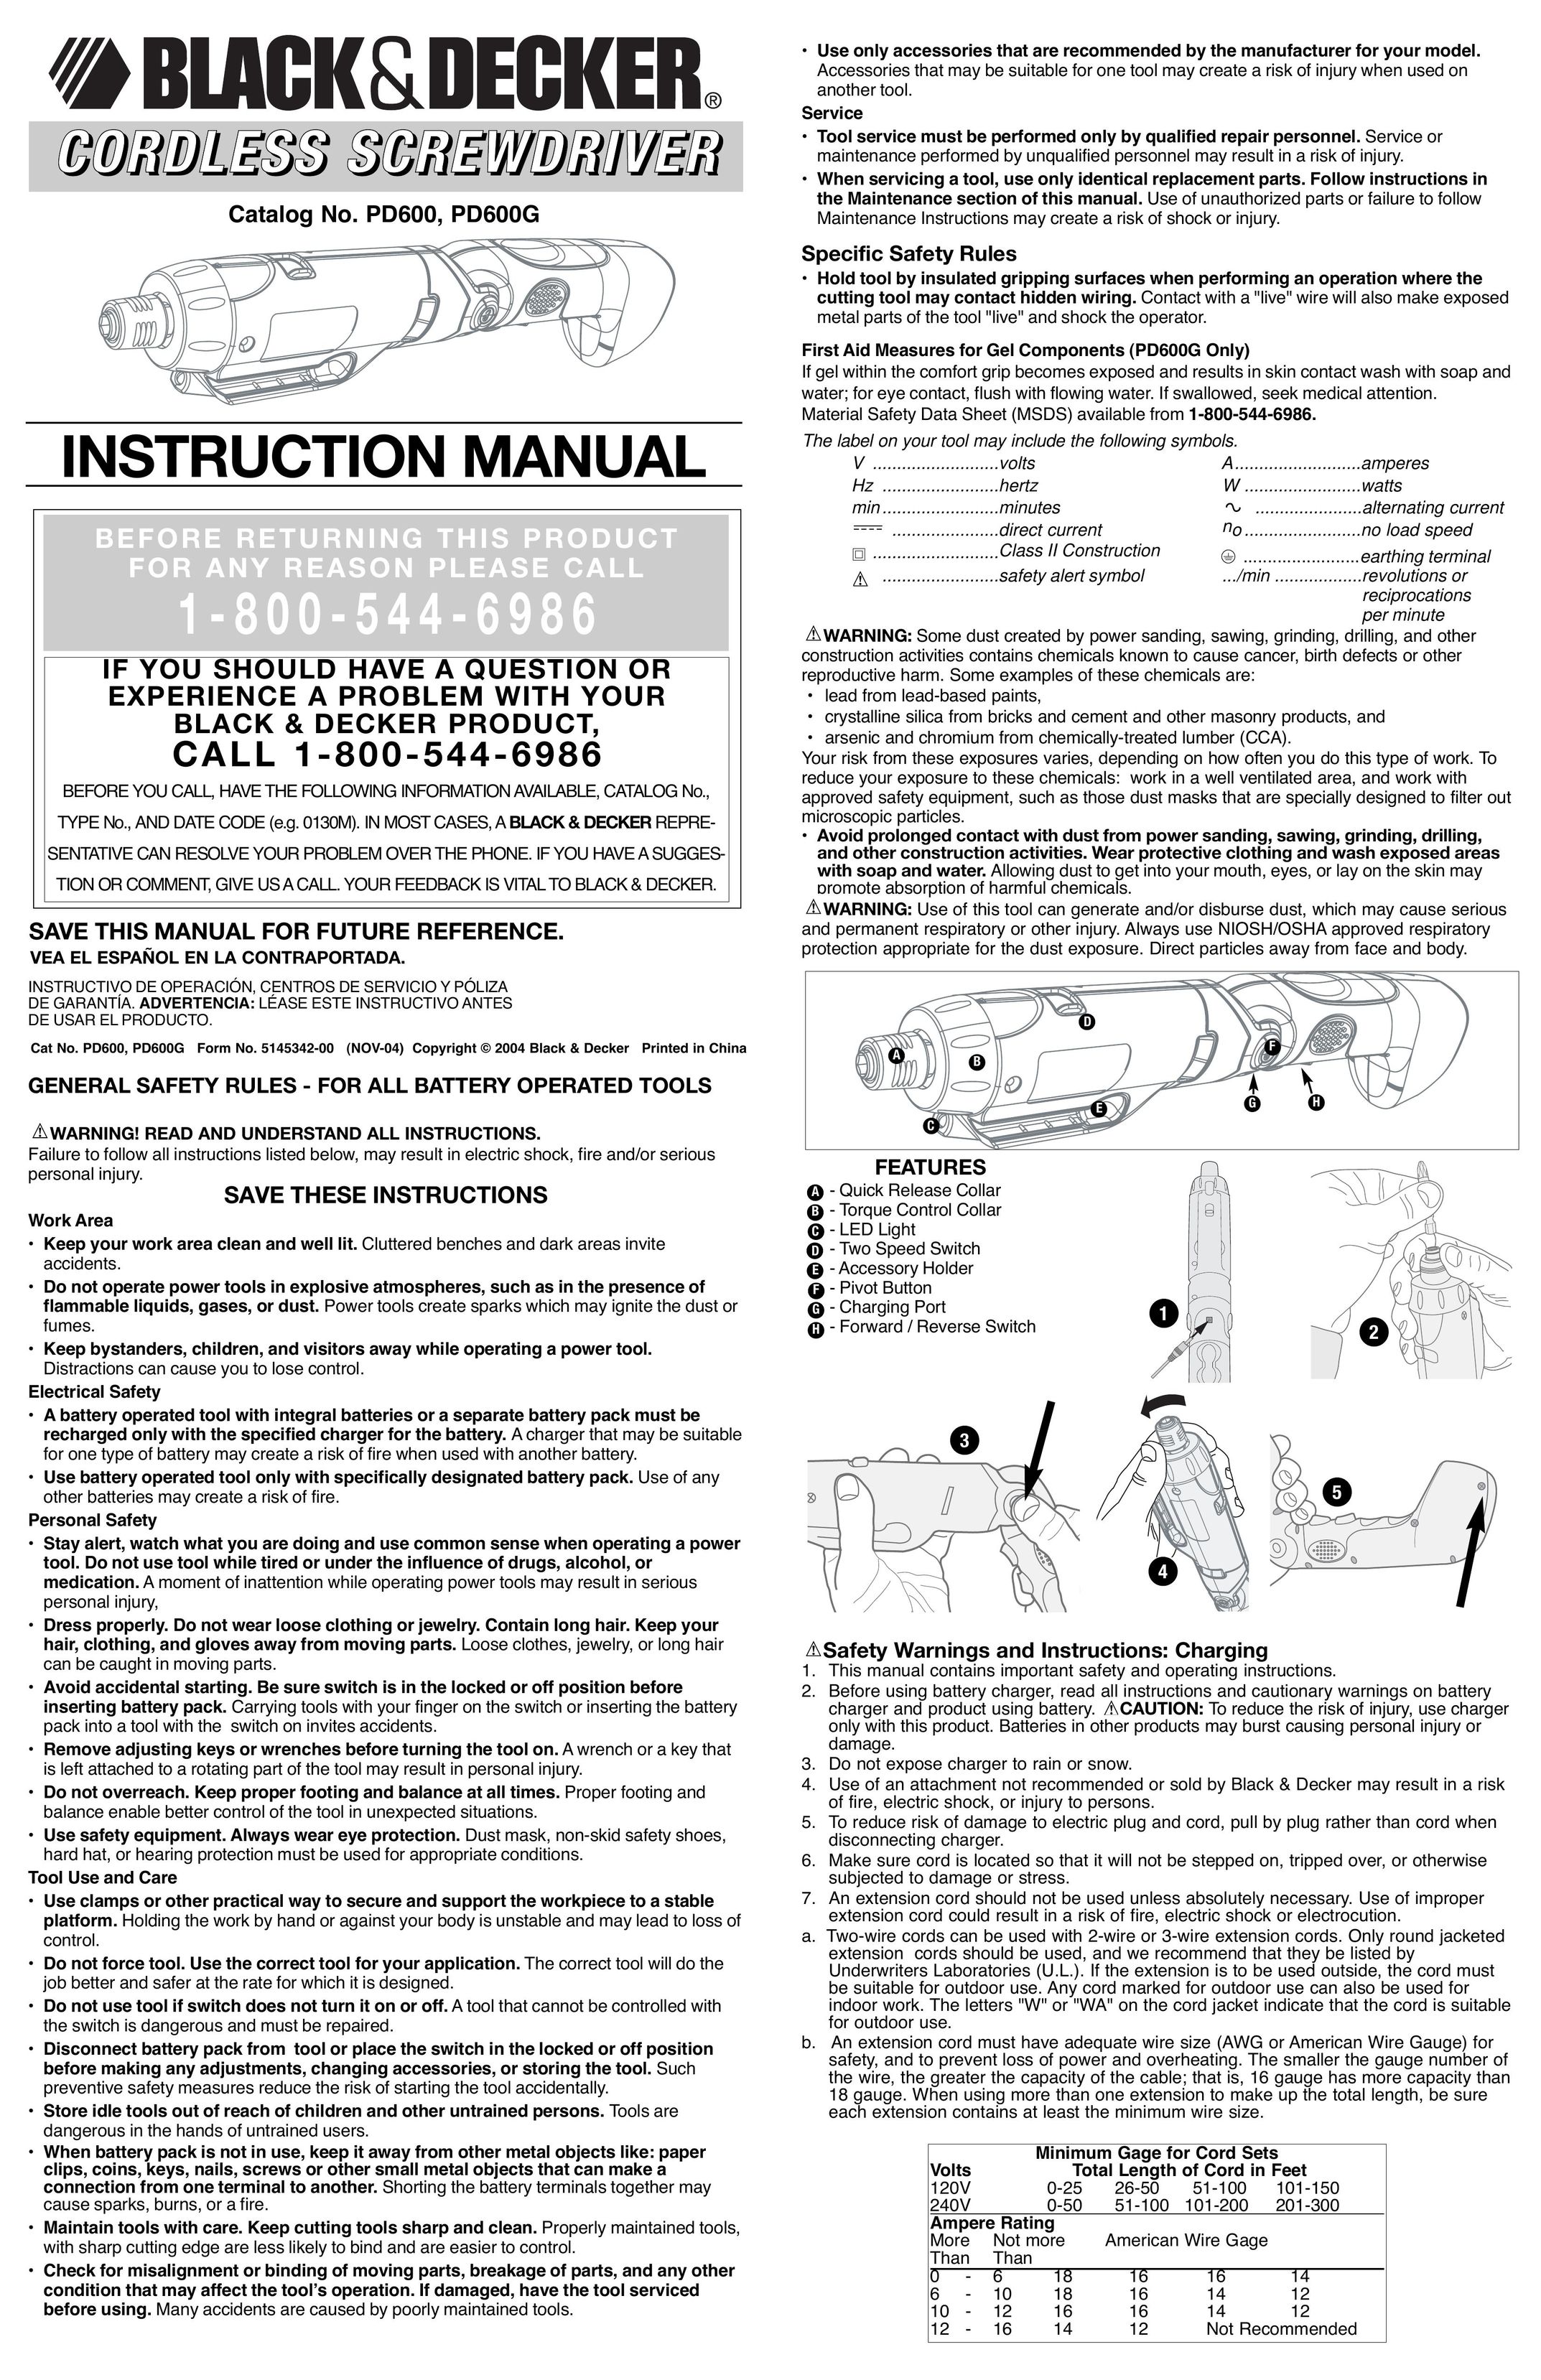 Black & Decker 5145342-00 Power Screwdriver User Manual